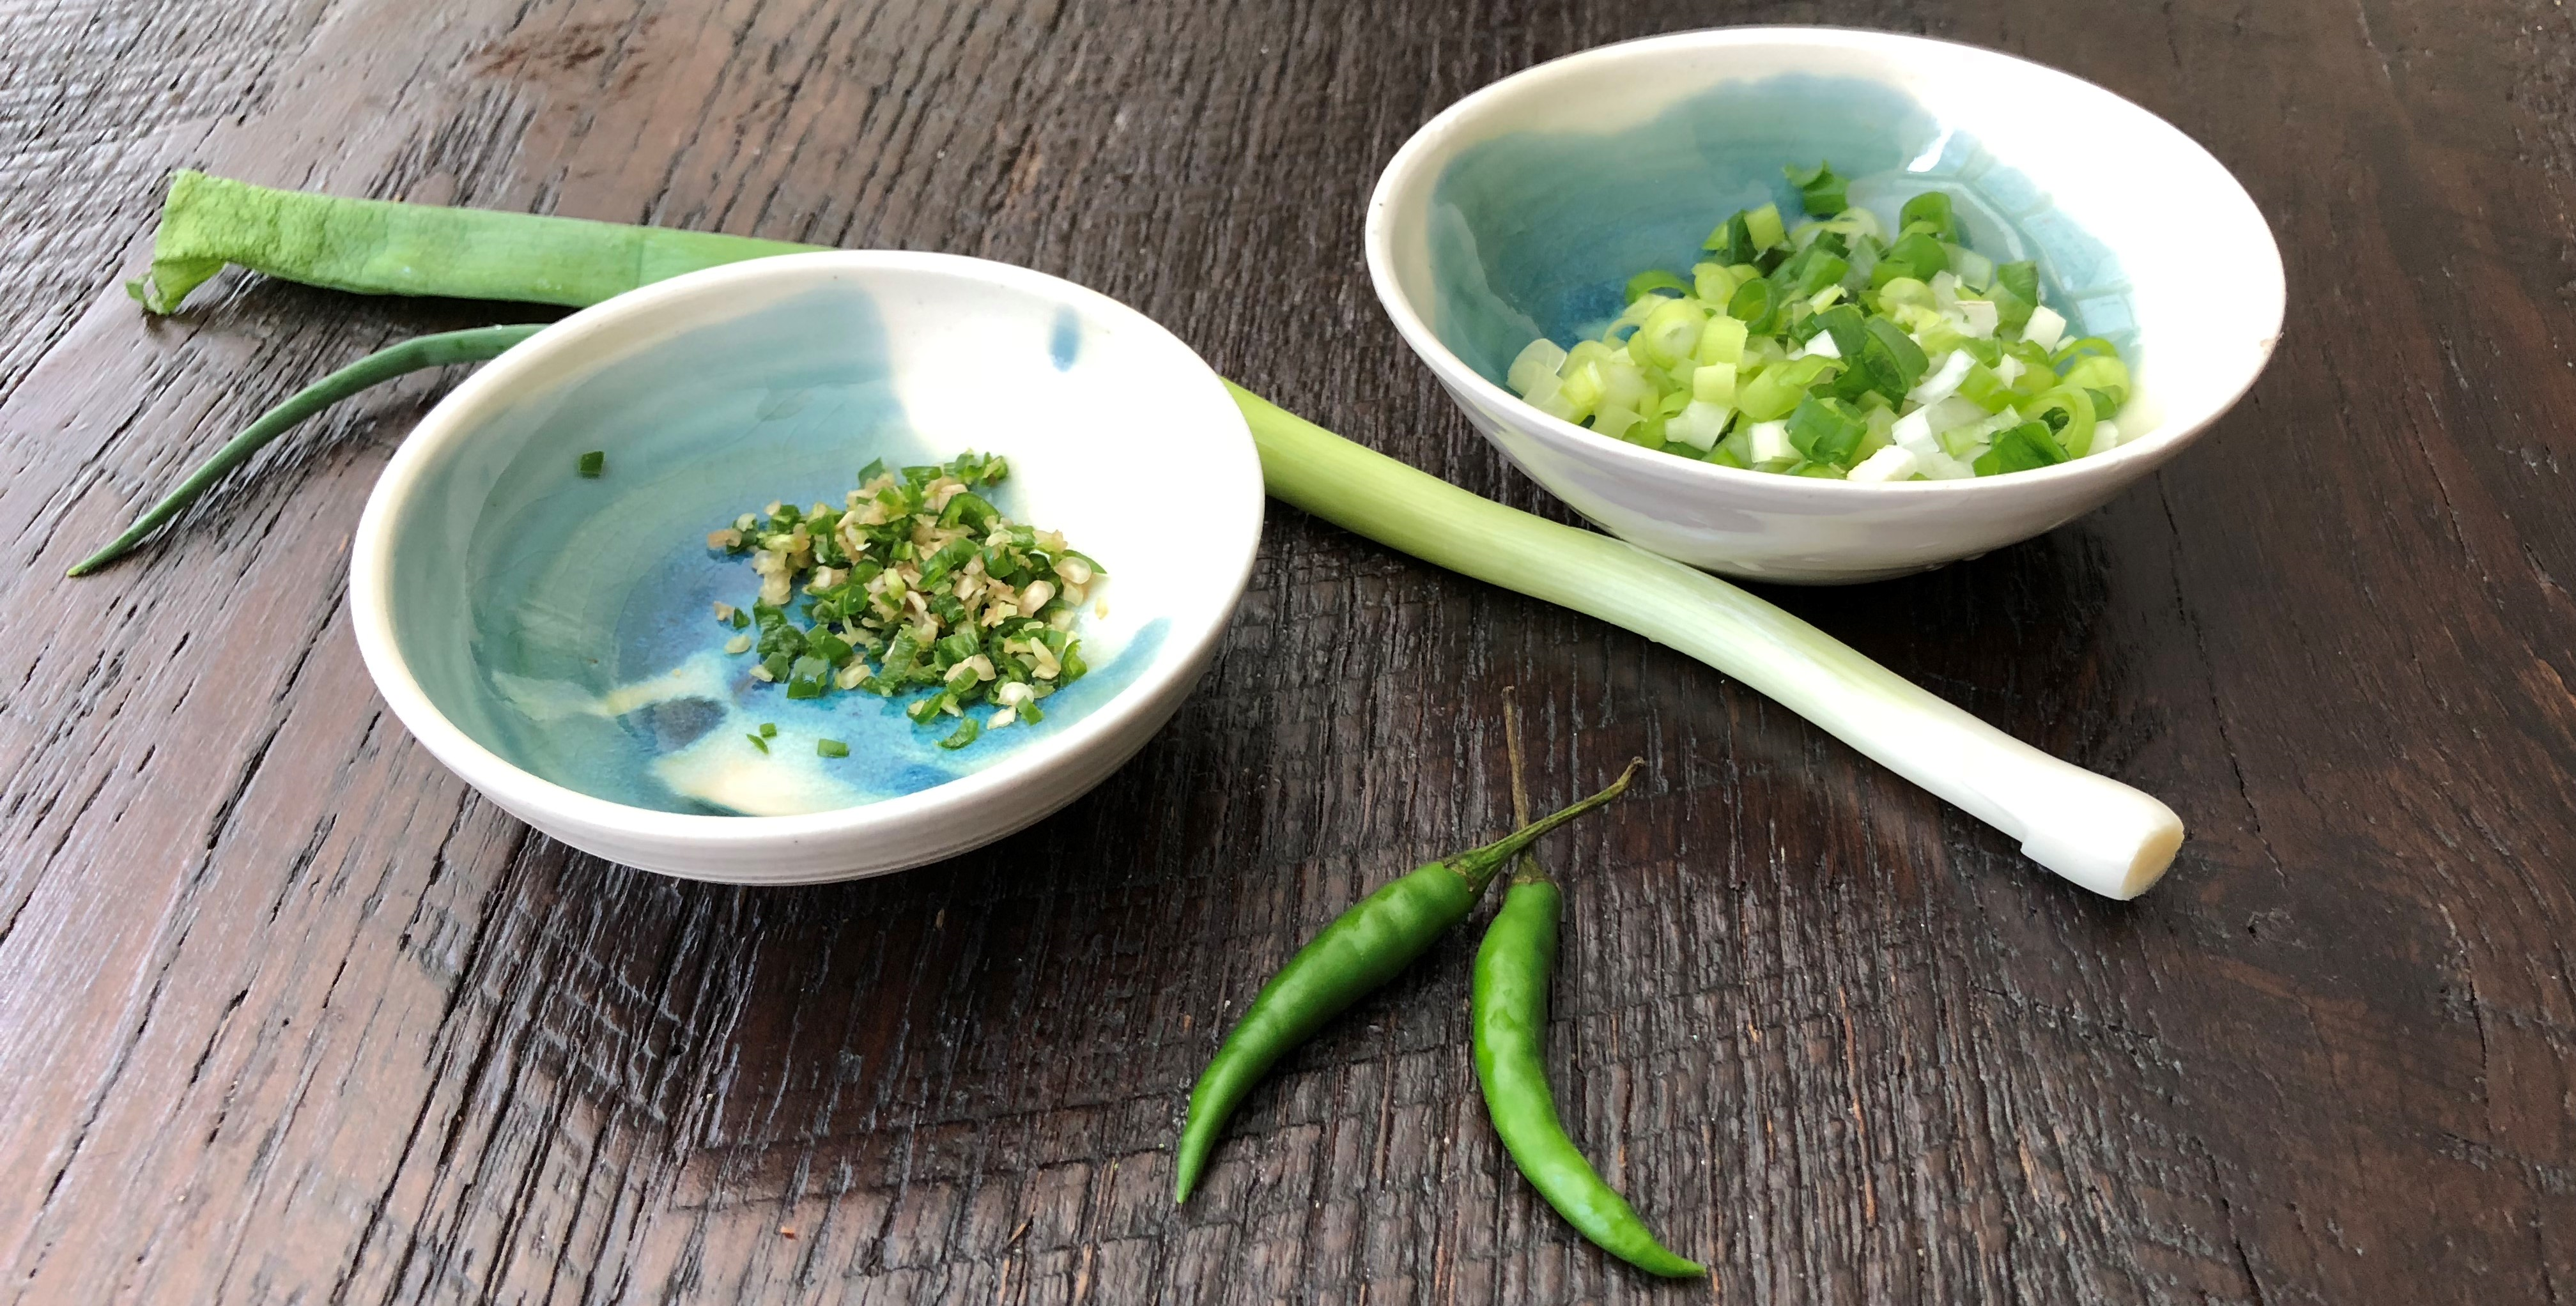 dewitt kendall ingredient bowls impulse purchase green chili tabletimes